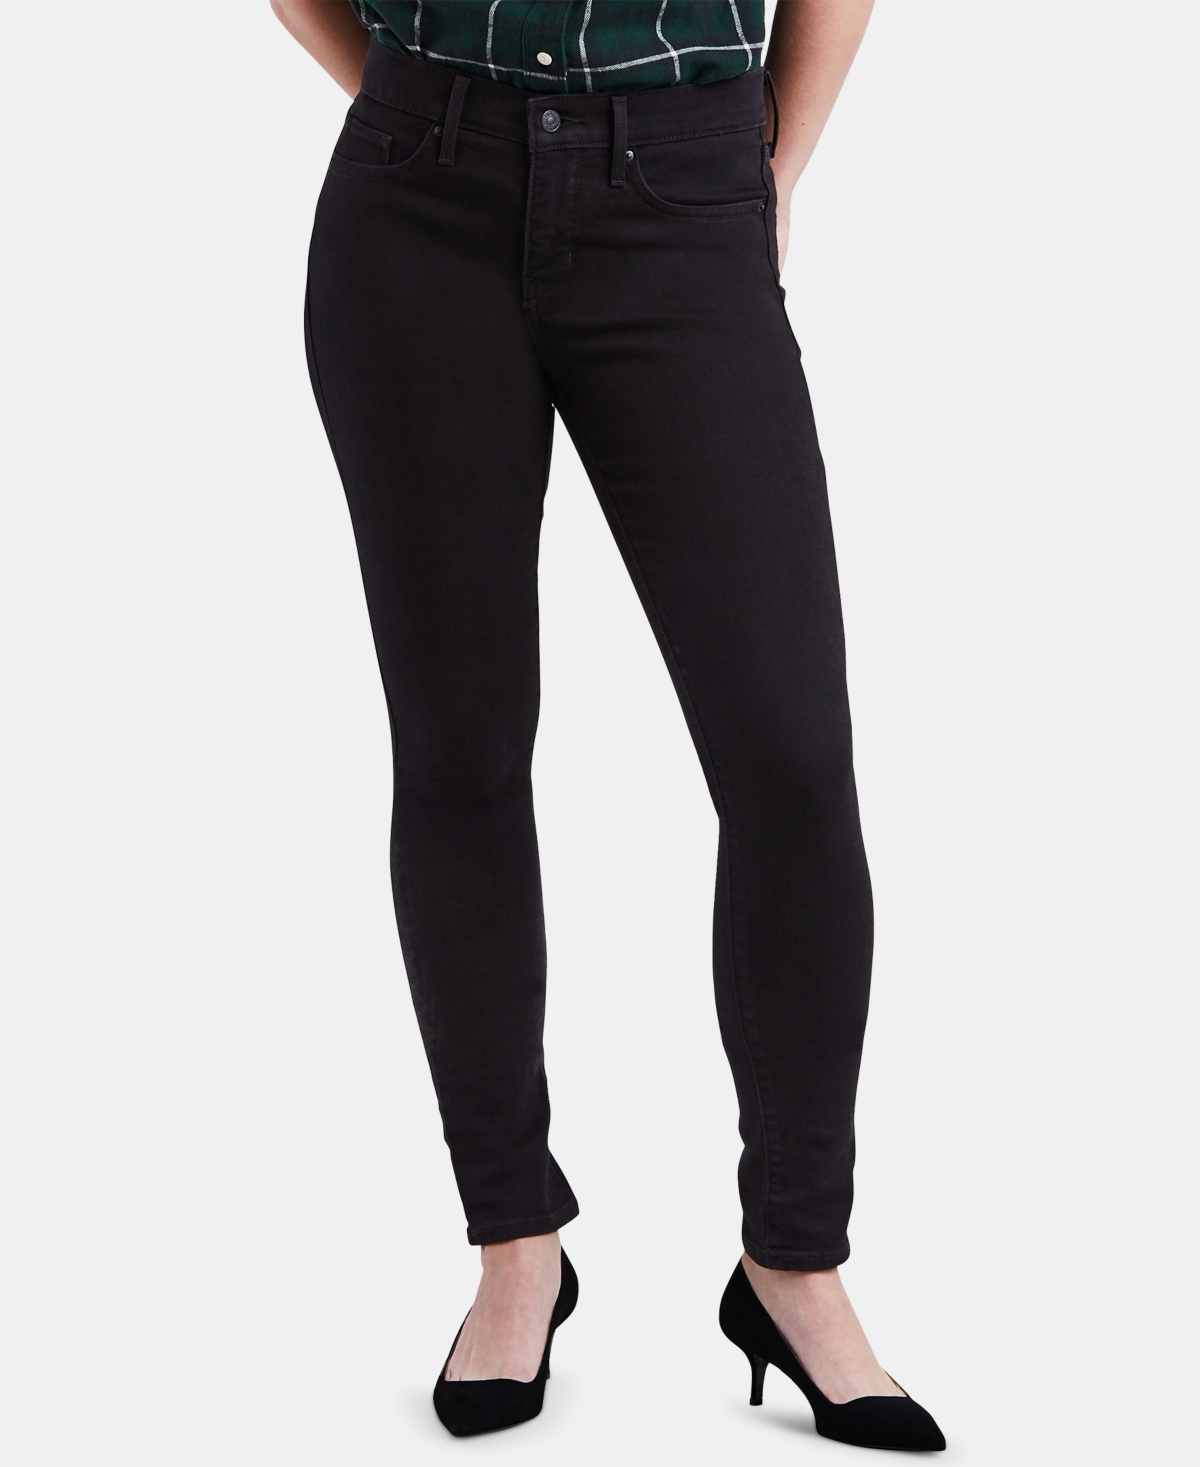 Women's 311 Shaping Skinny Jeans in Long Length - Black